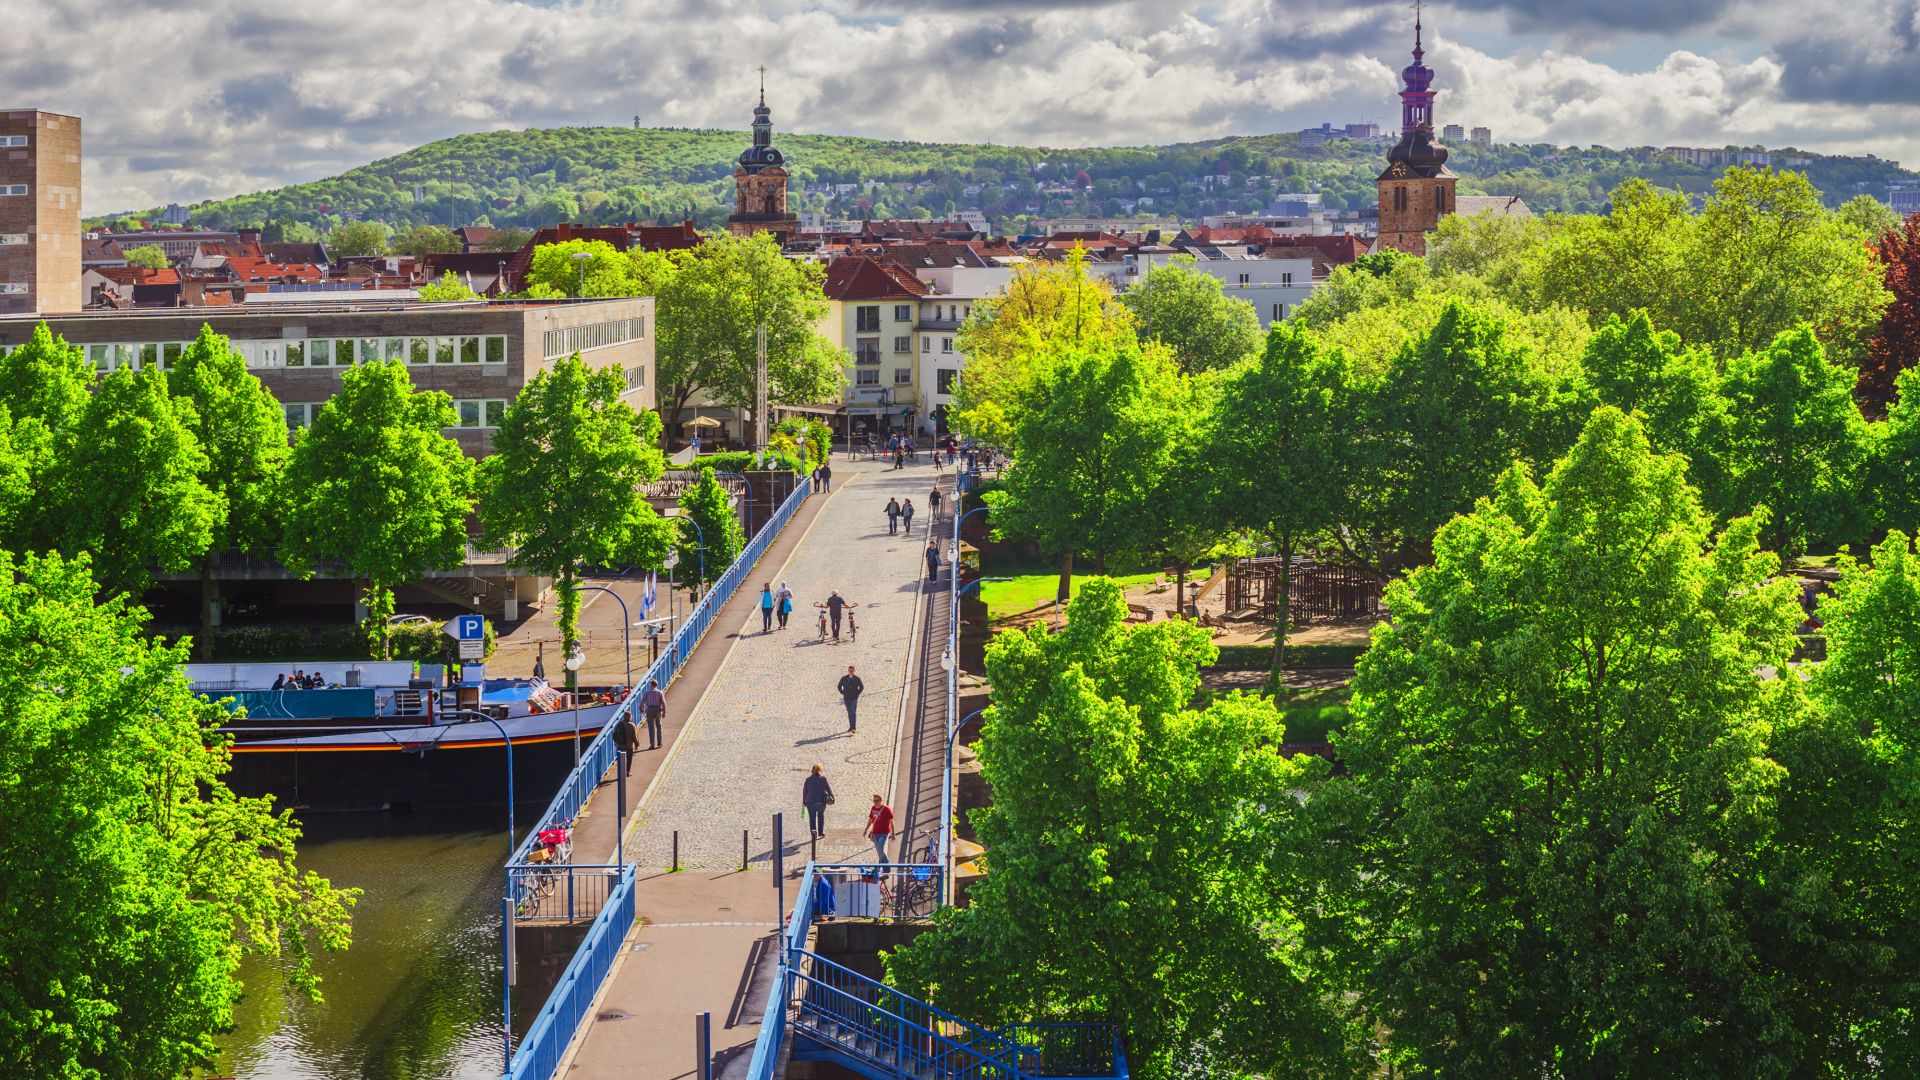 Saarbrücken: Old bridge with old town in the background